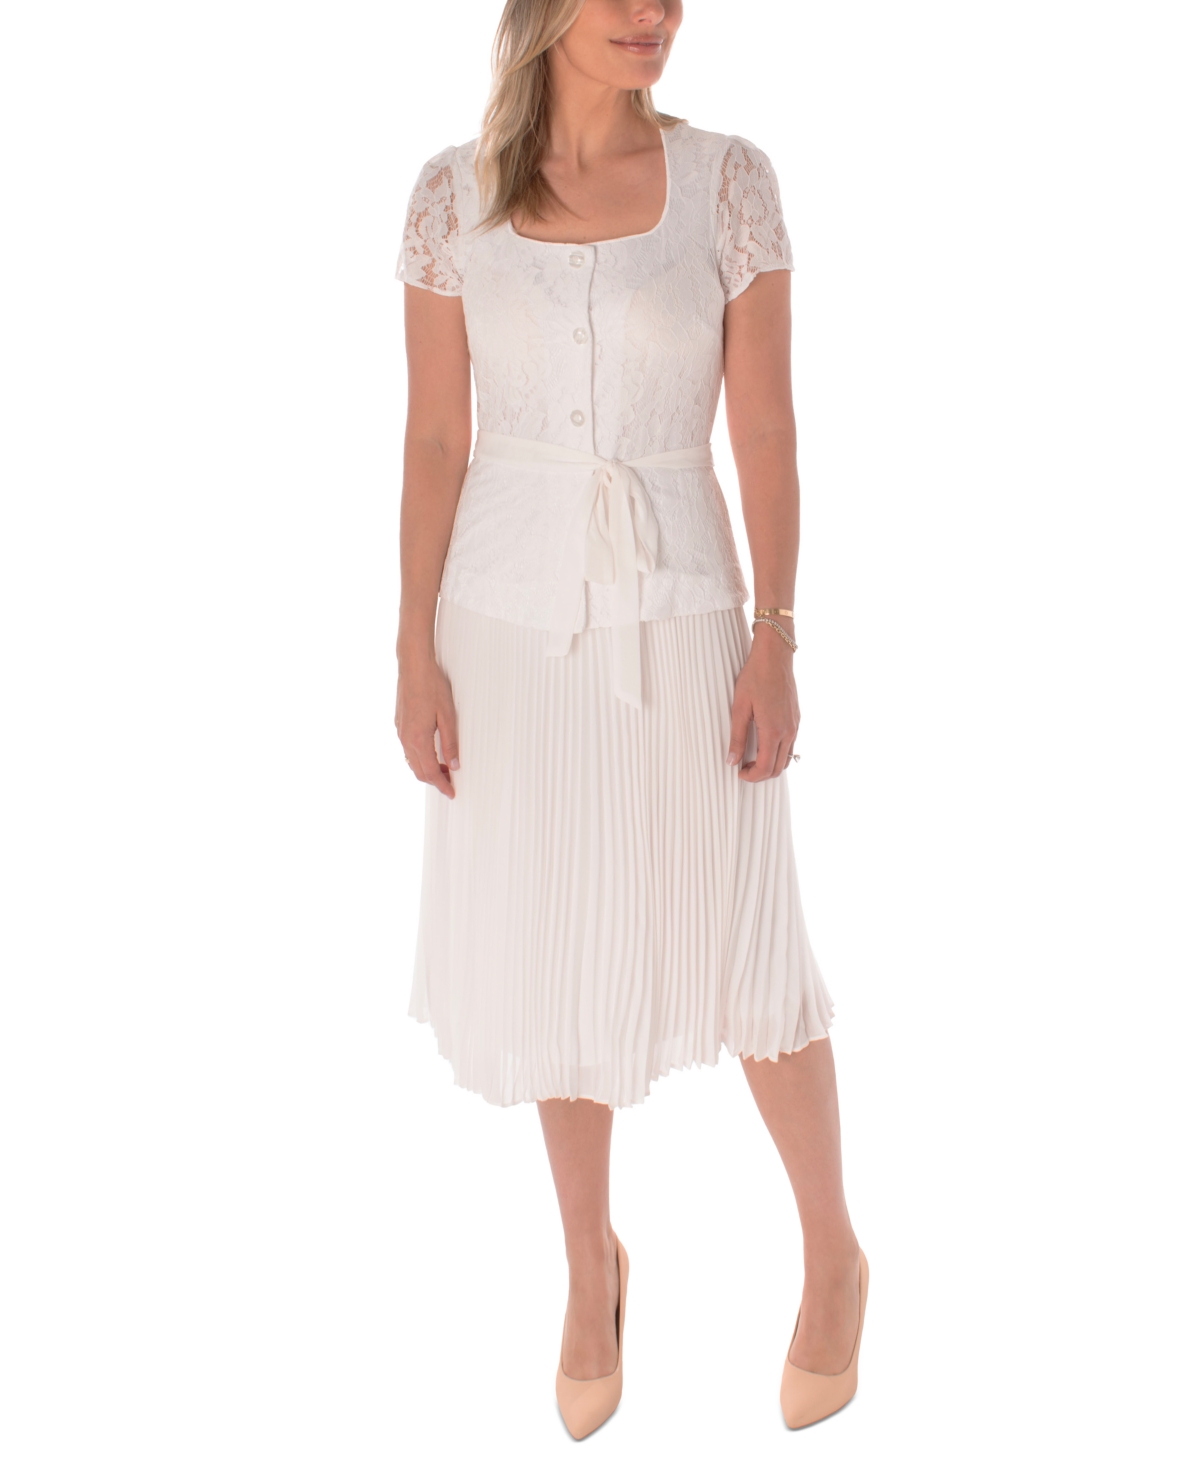 Women's Lace-Bodice Pleated Dress - Ivory